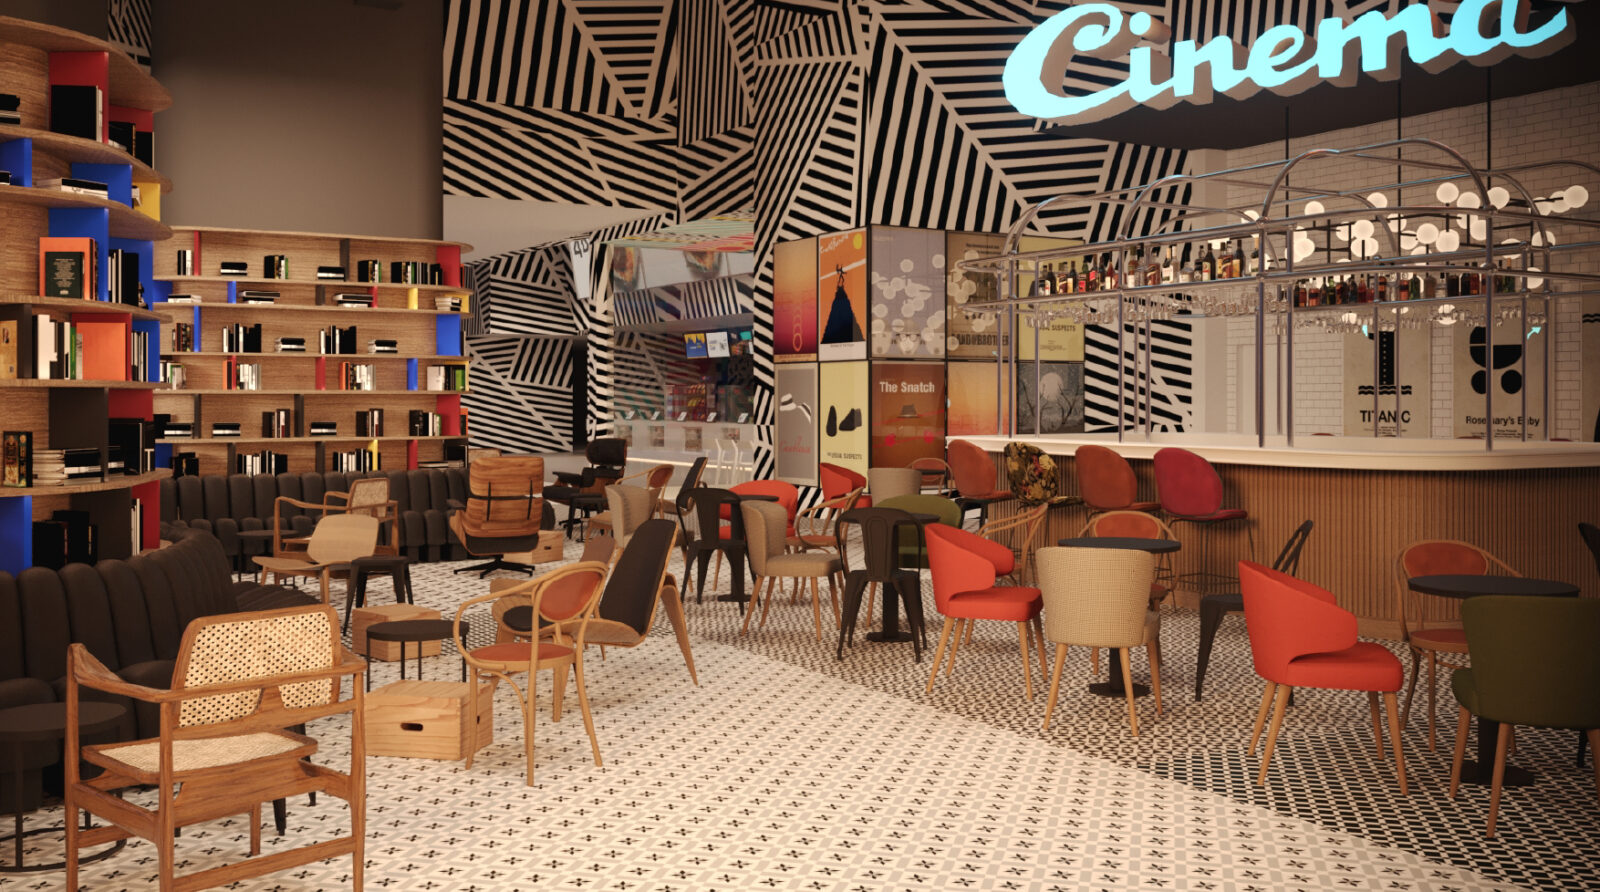 CineStar Z centar_Cinema bar_render 2